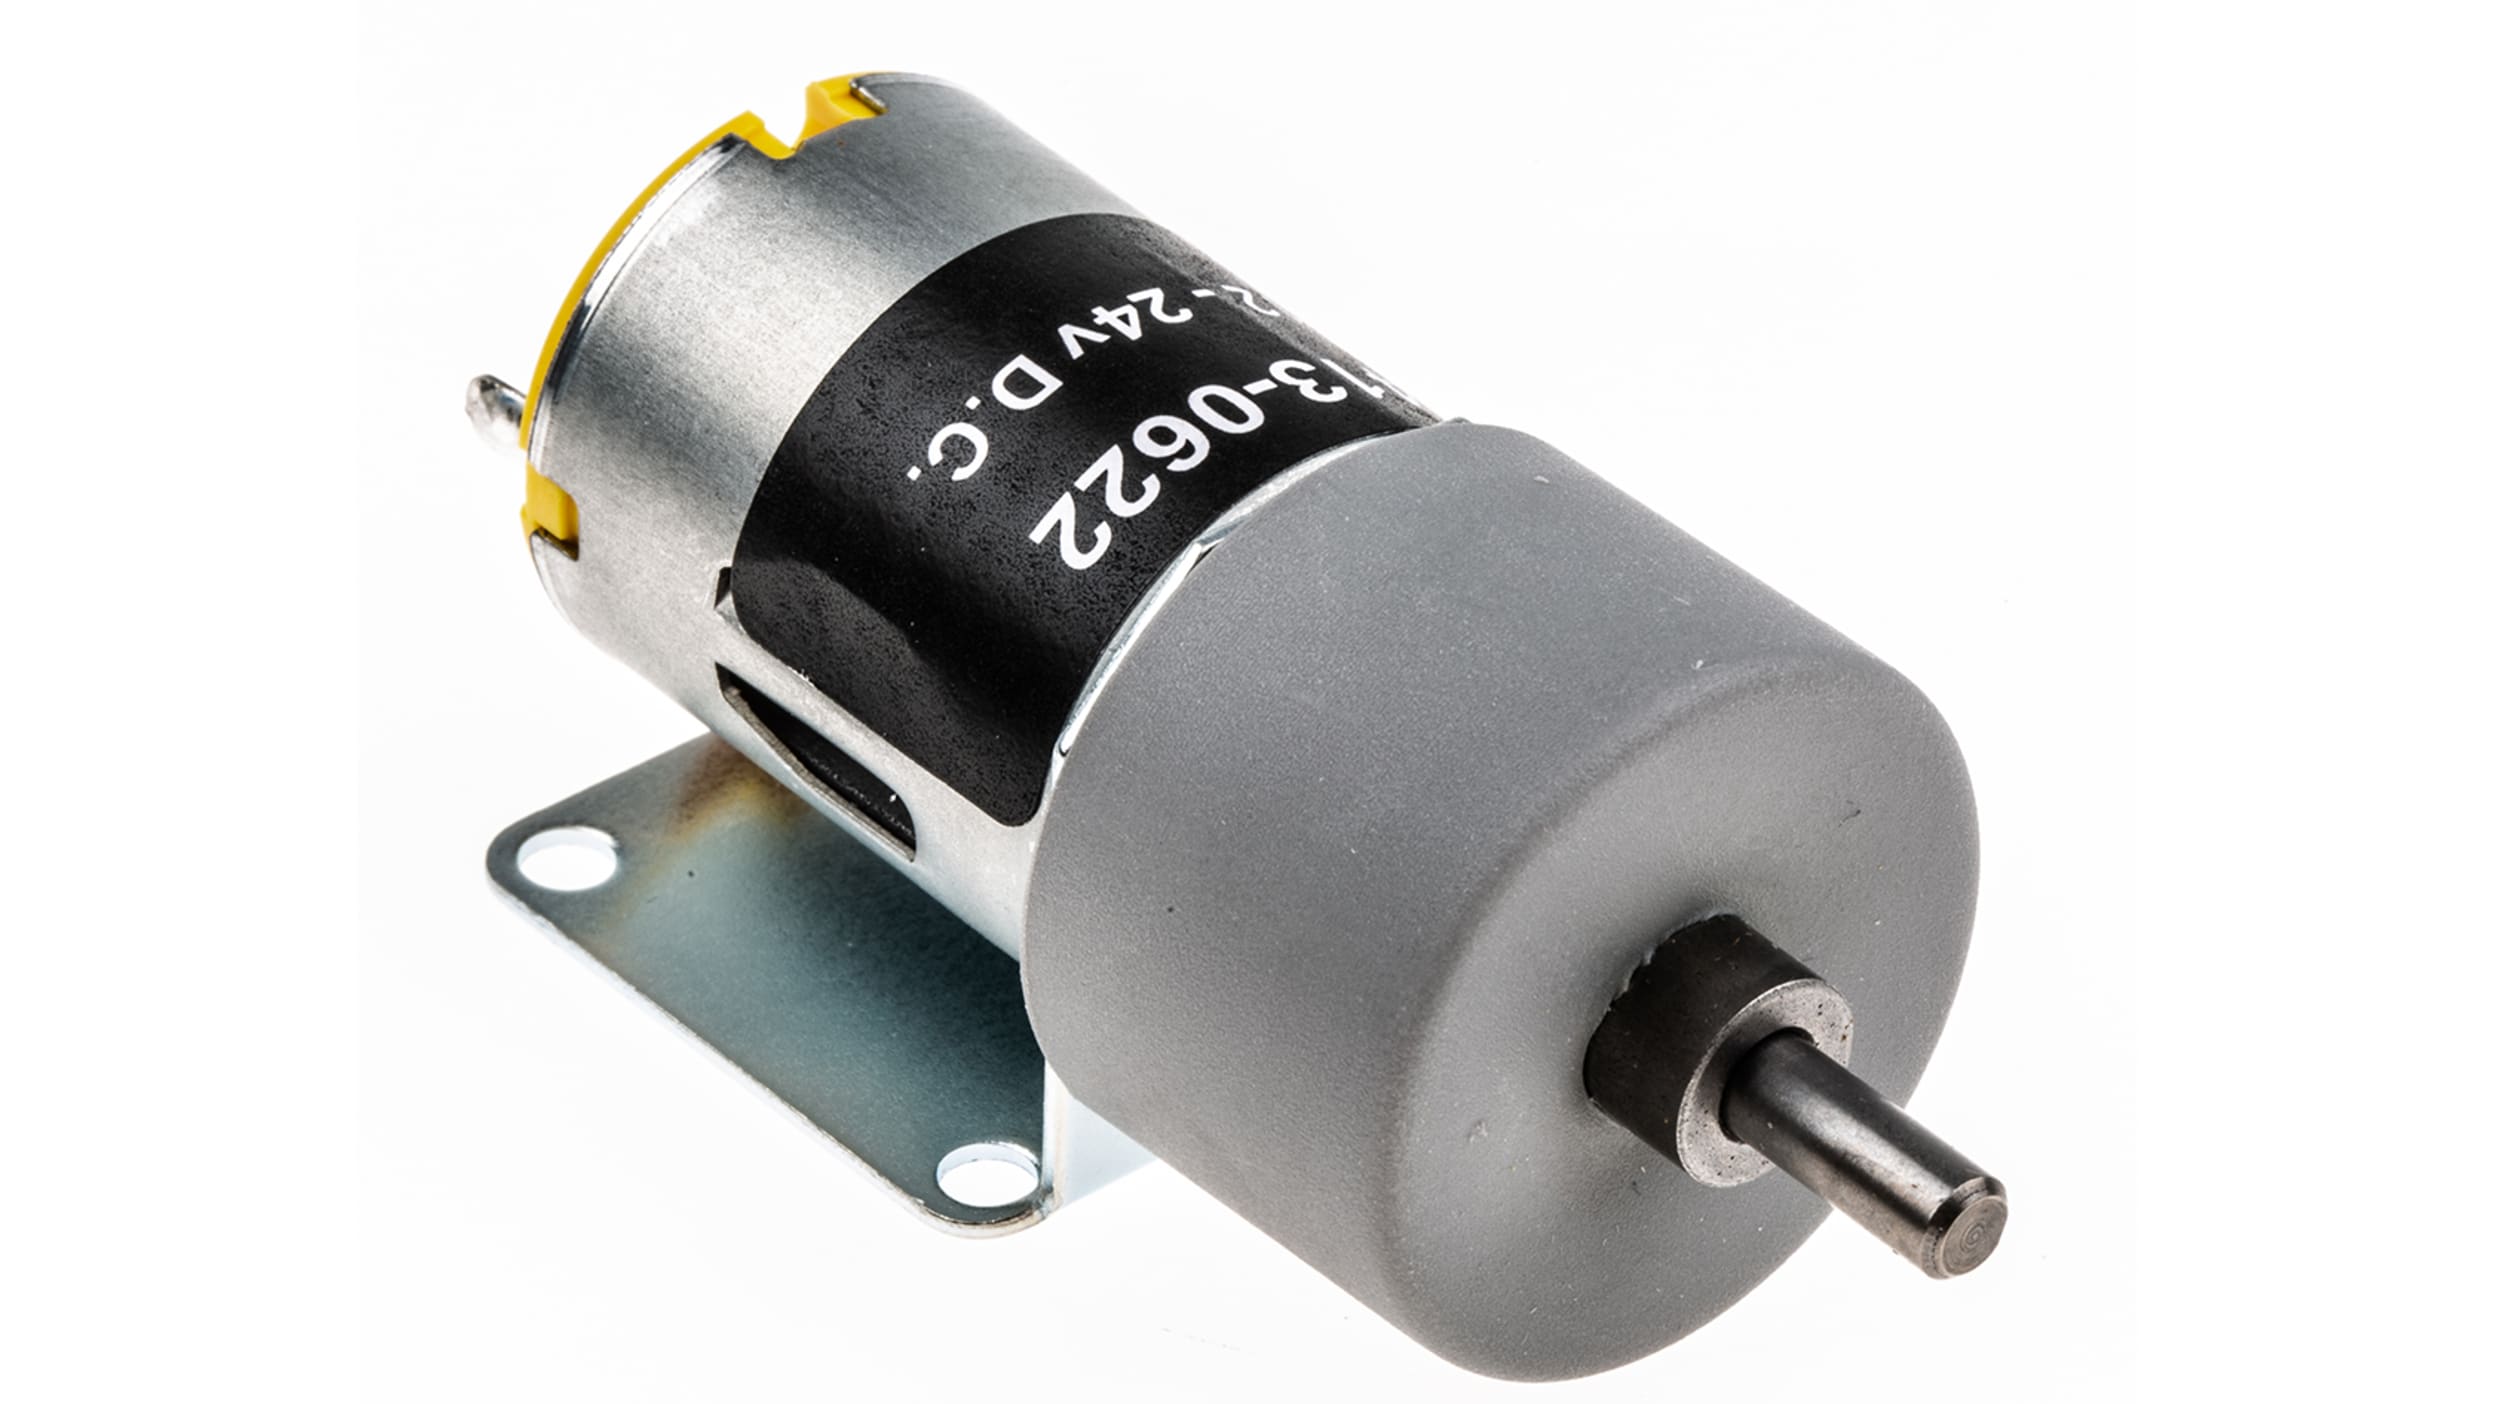 RS PRO Geared 1.5 → 3 V dc 7800 rpm, 2mm Shaft Diameter